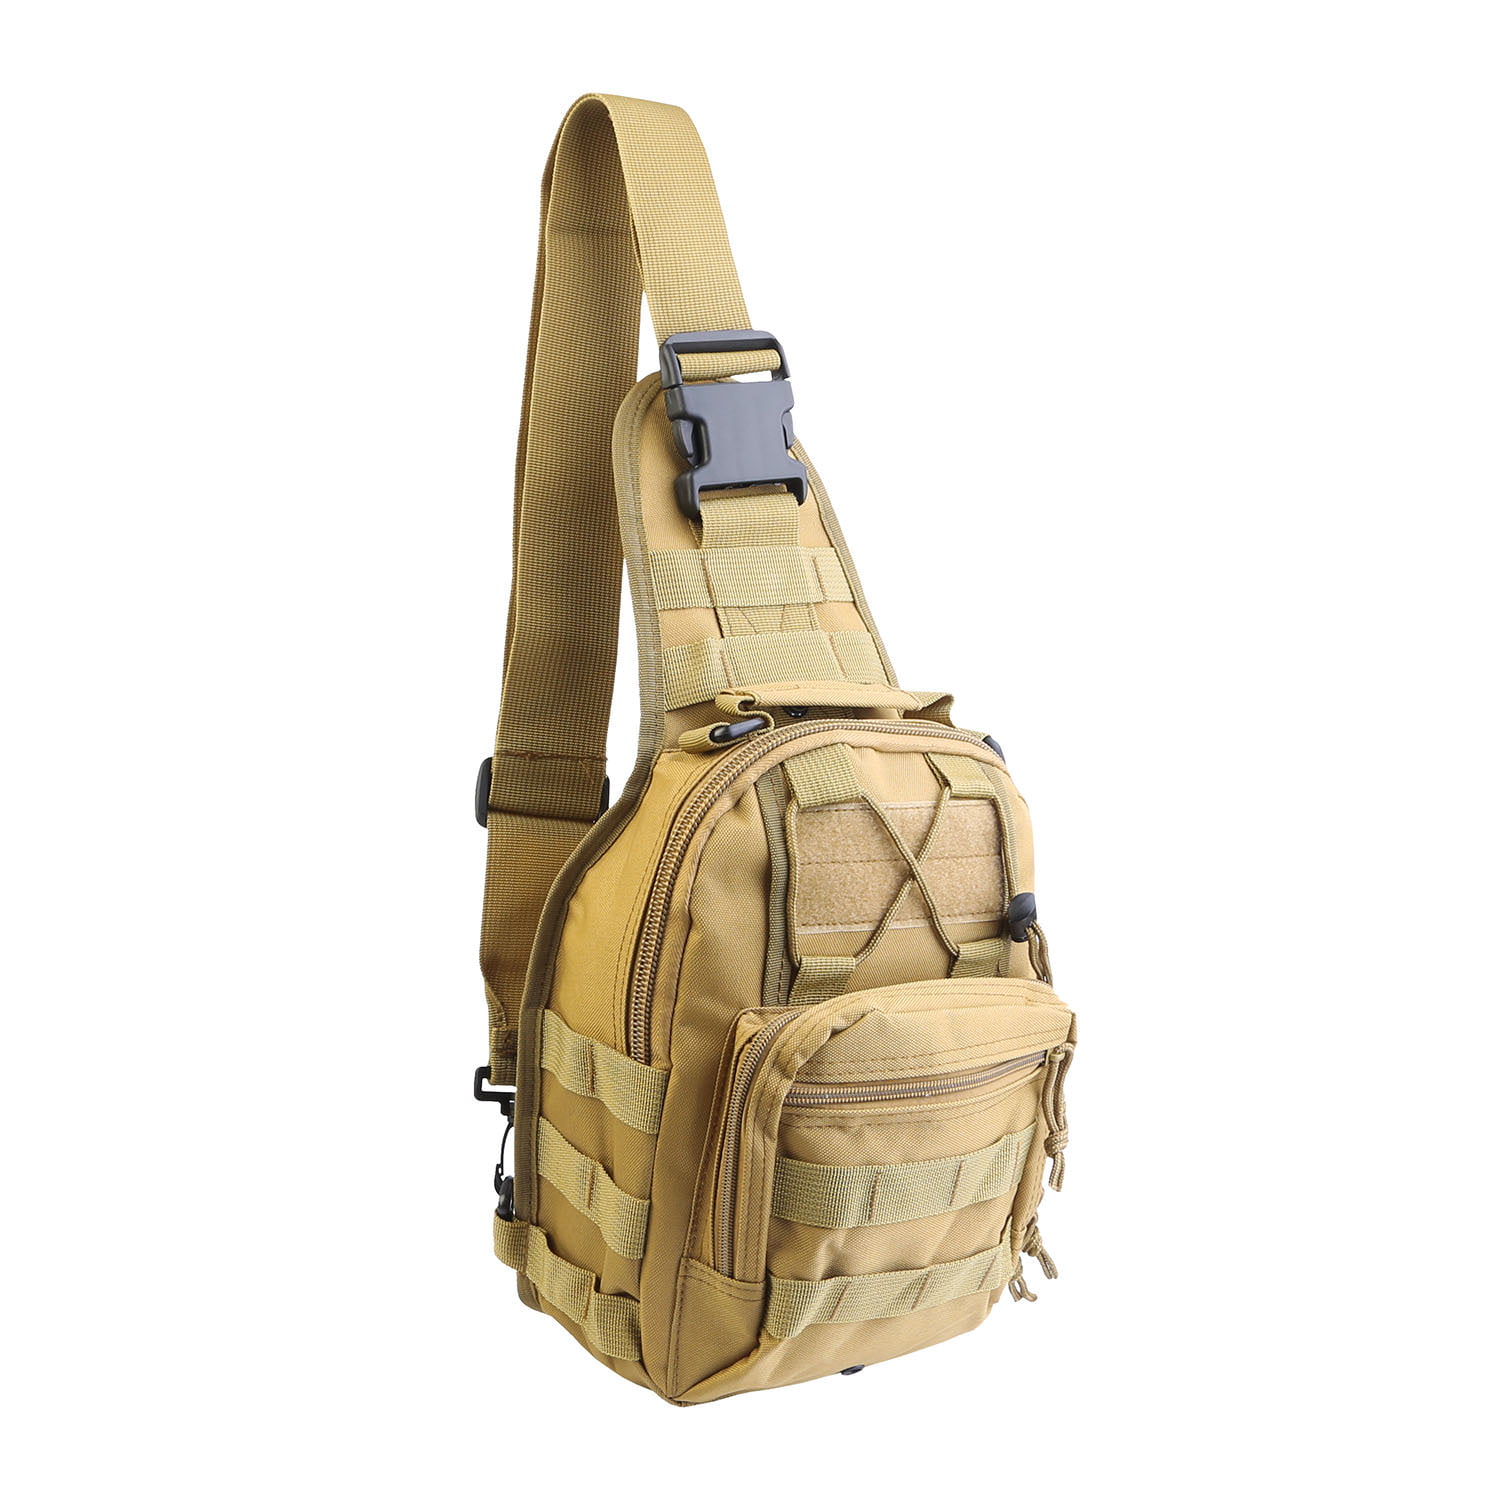 iMountek - Outdoor Military Tactical Shoulder Chest Sling Backpack - www.semadata.org - www.semadata.org